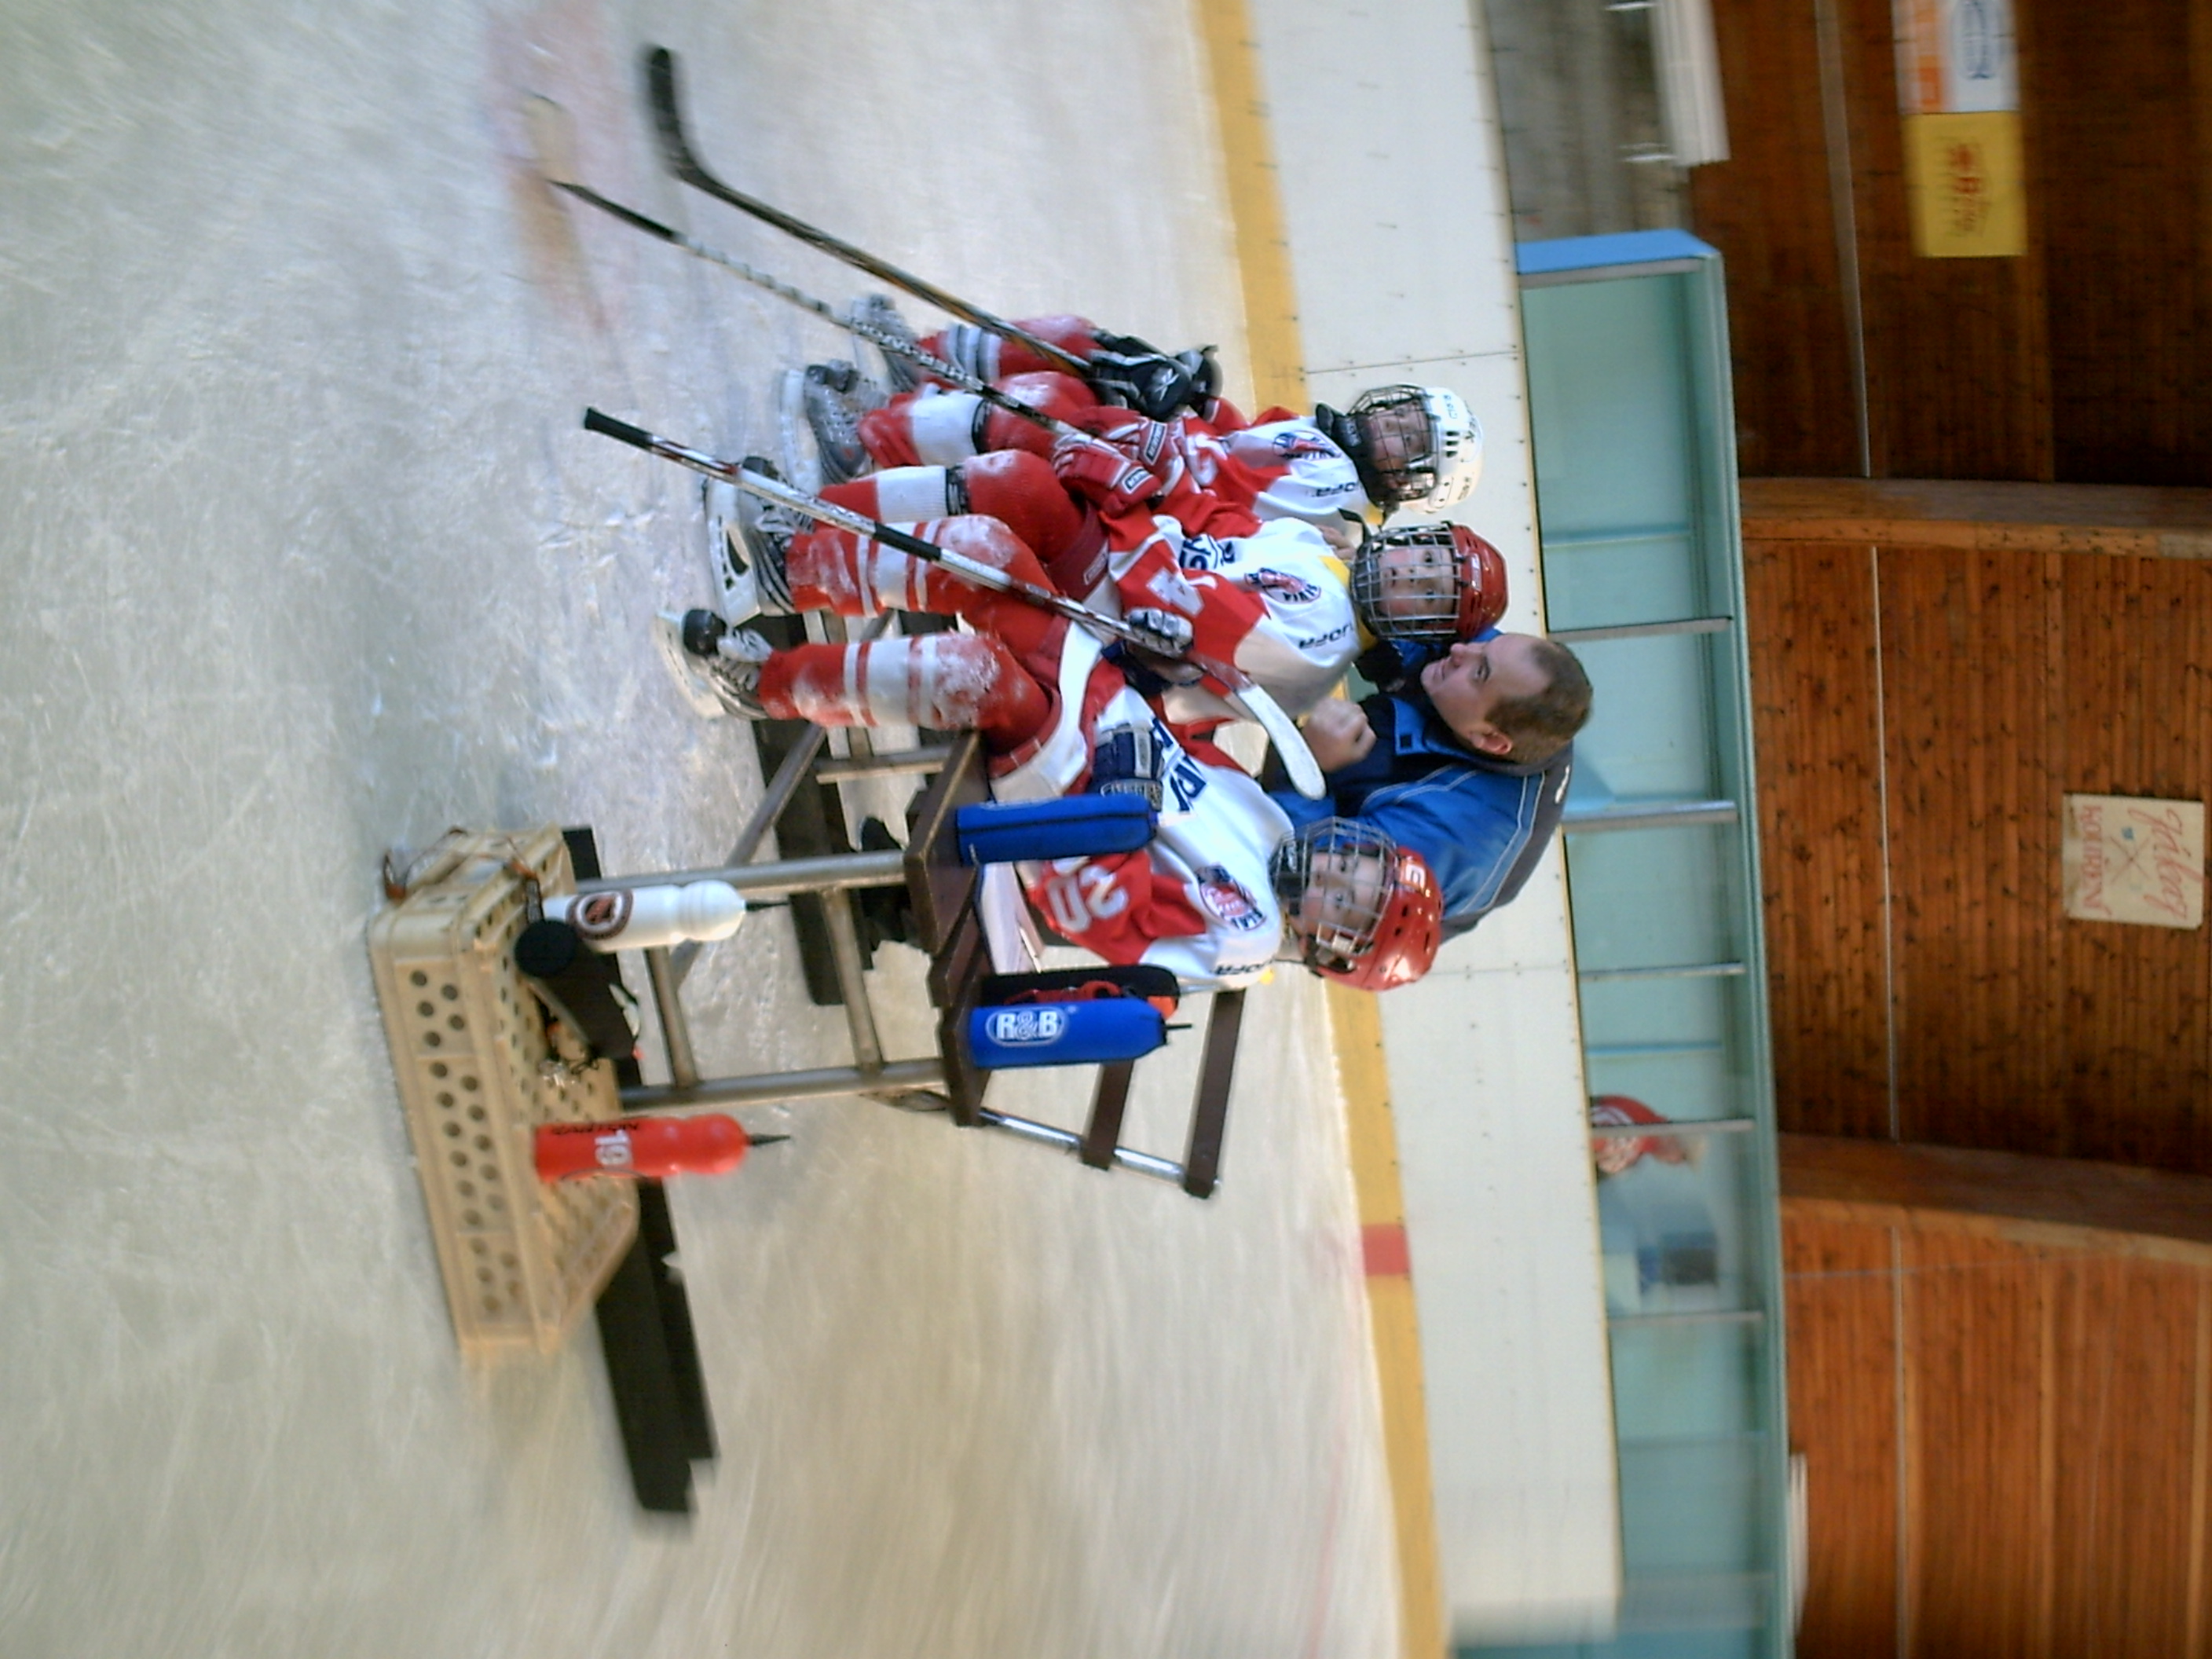 2010-Poděbrady-Vašek turnaj 006.jpg